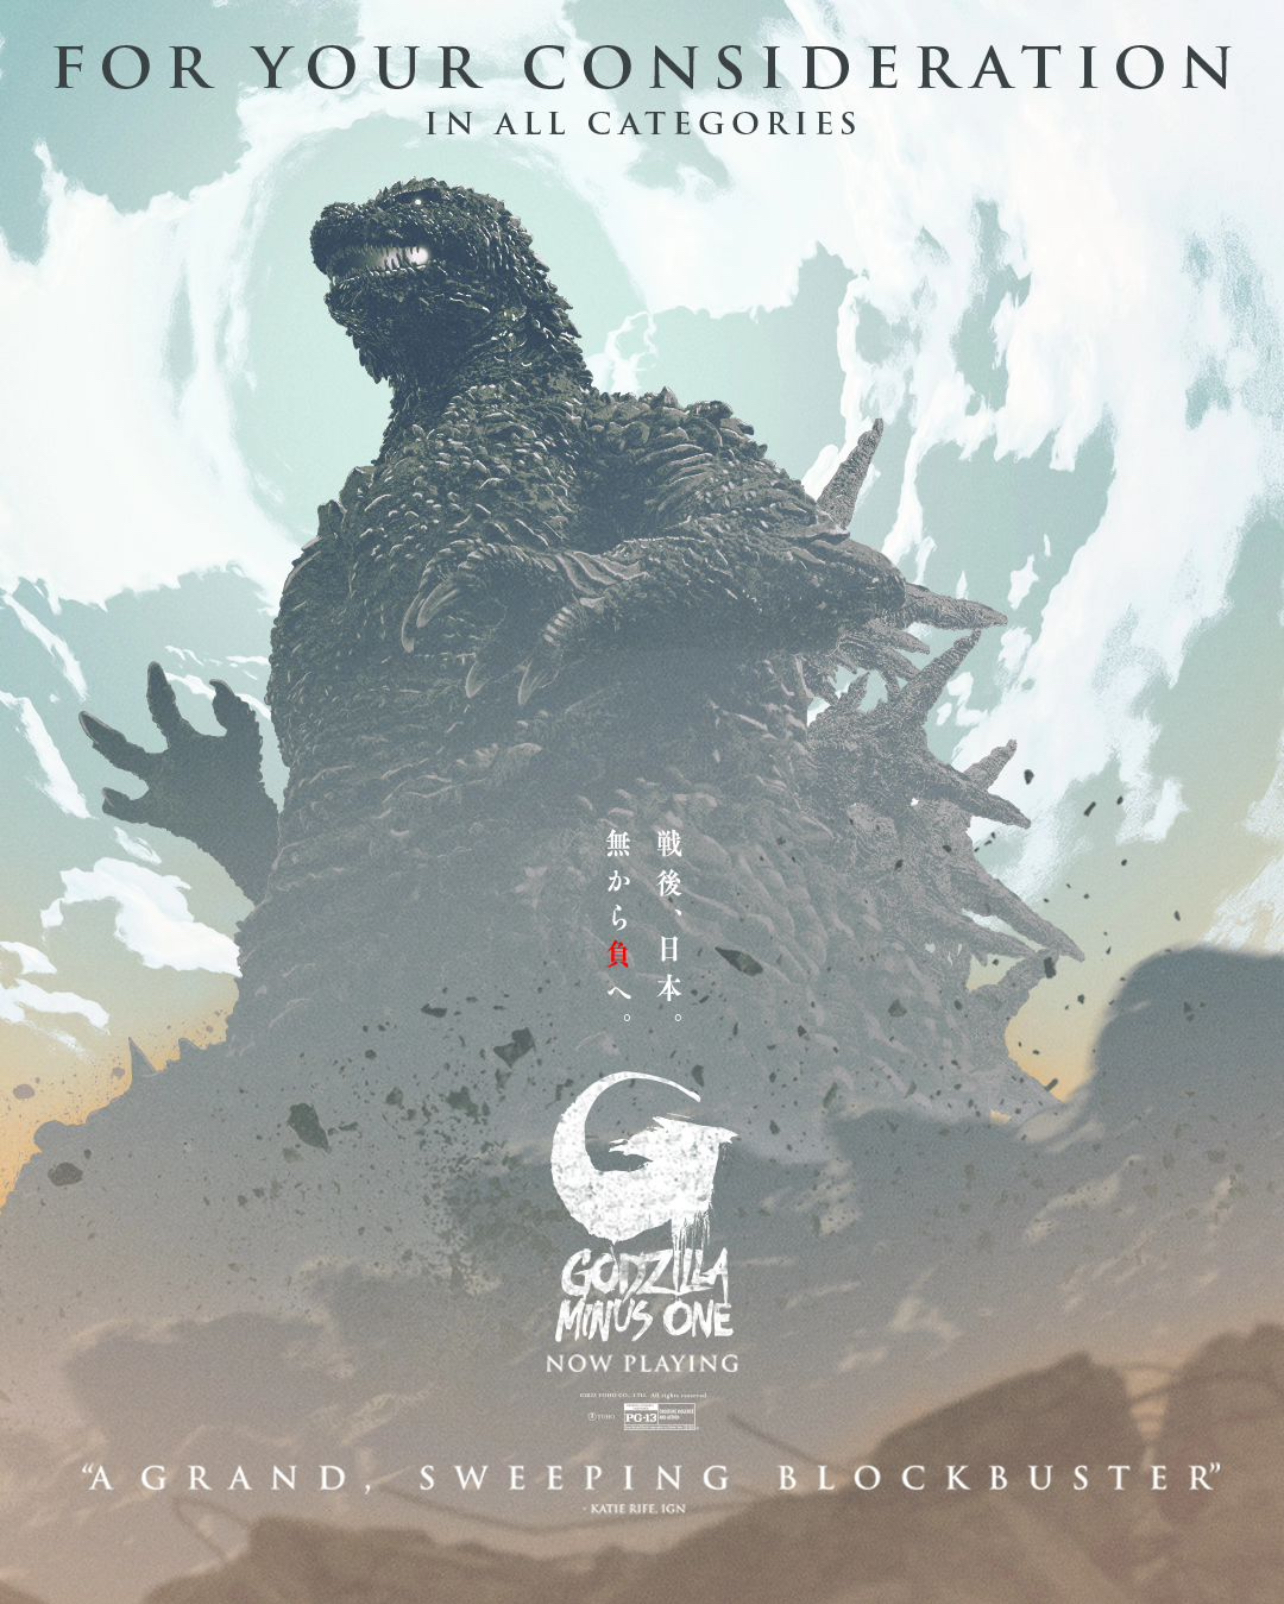 Godzilla Minus One Awards Poster Godzilla Minus One Image Gallery 0894